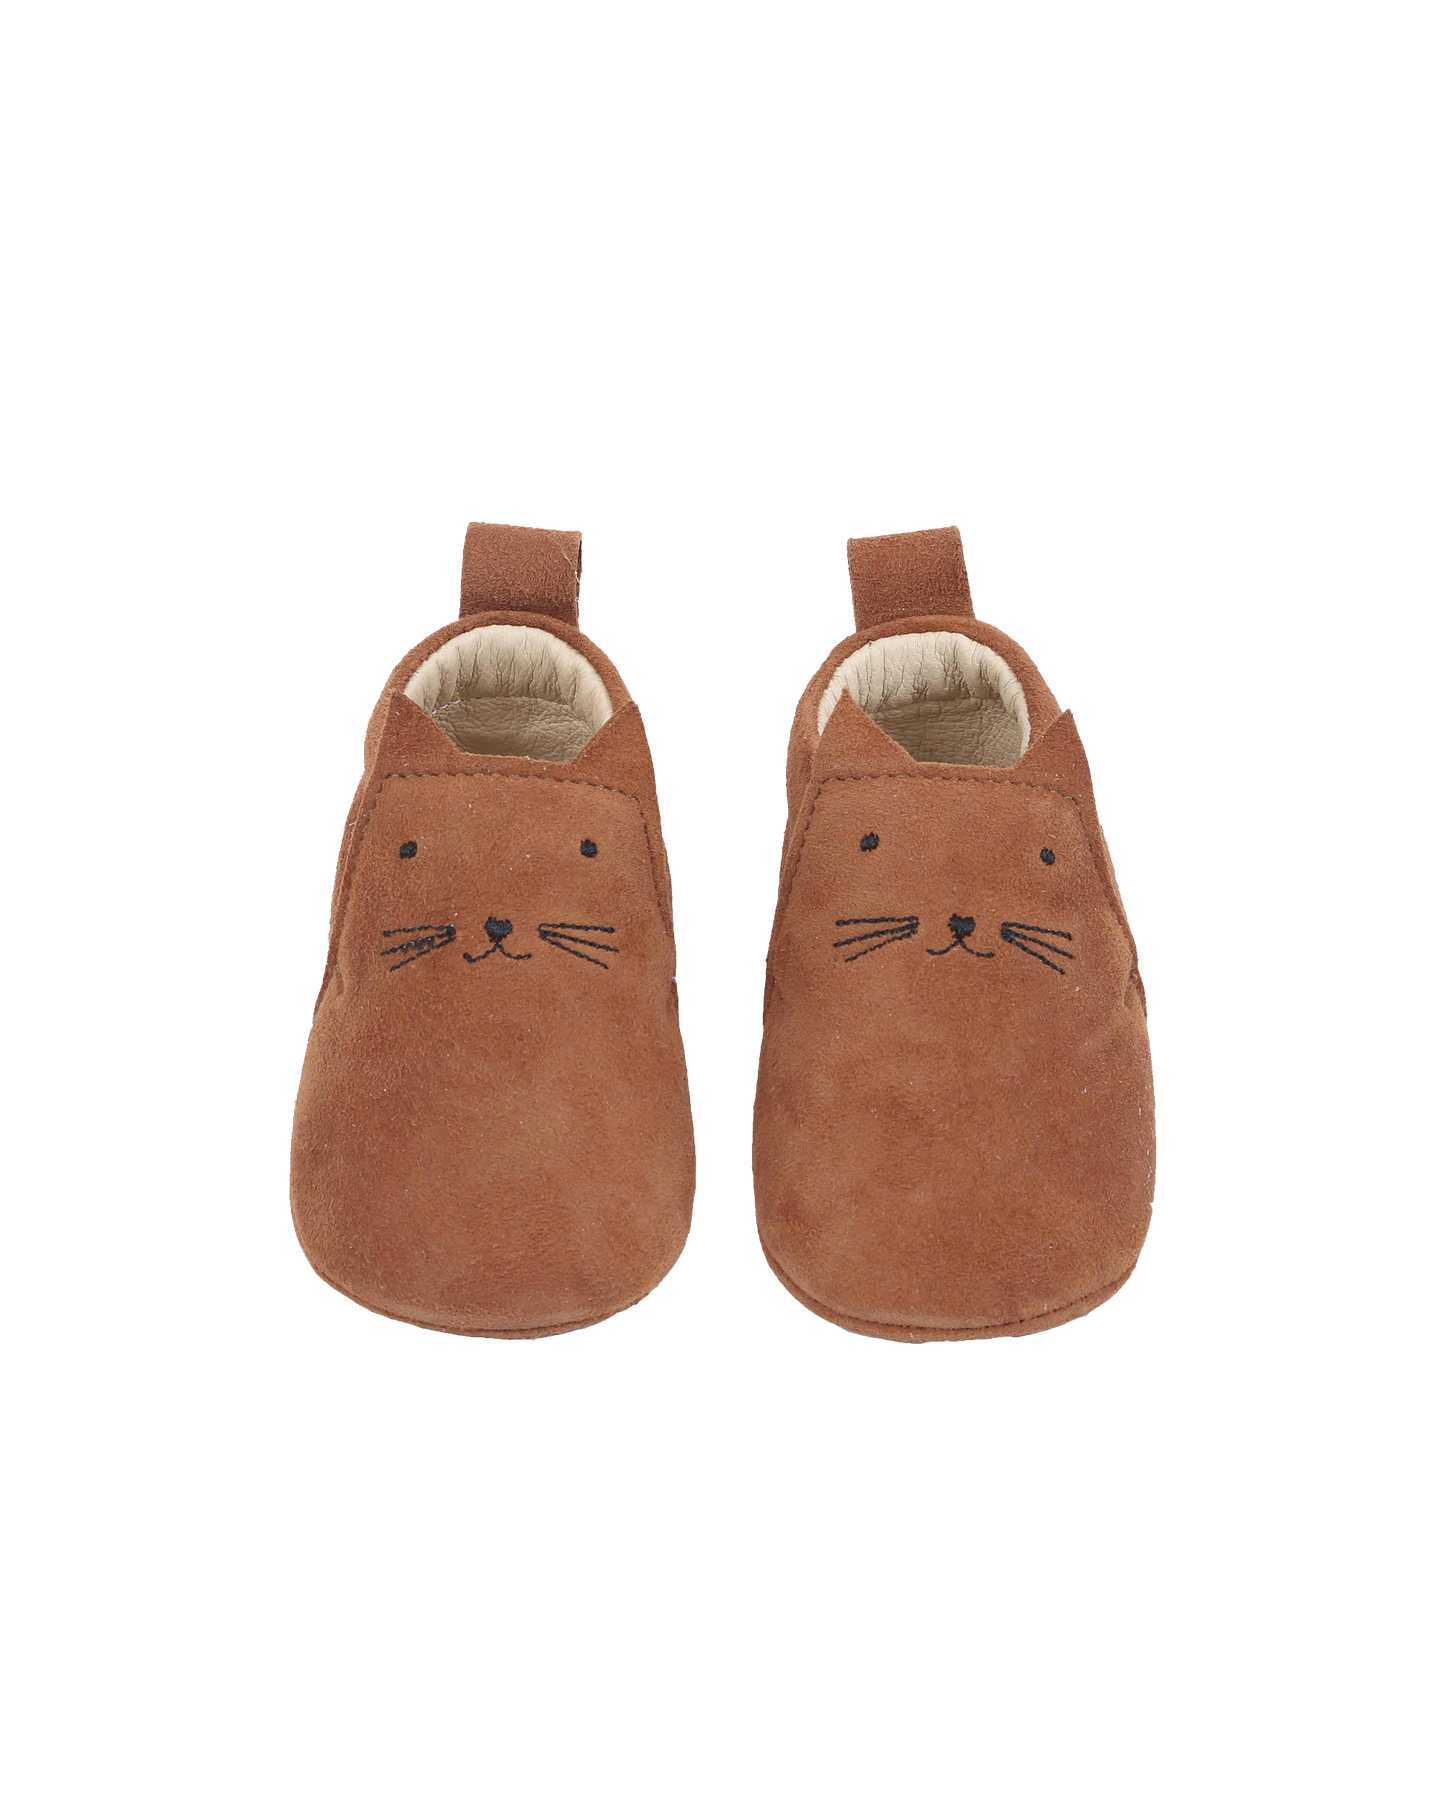 chaussons bebe chat en cuir camel